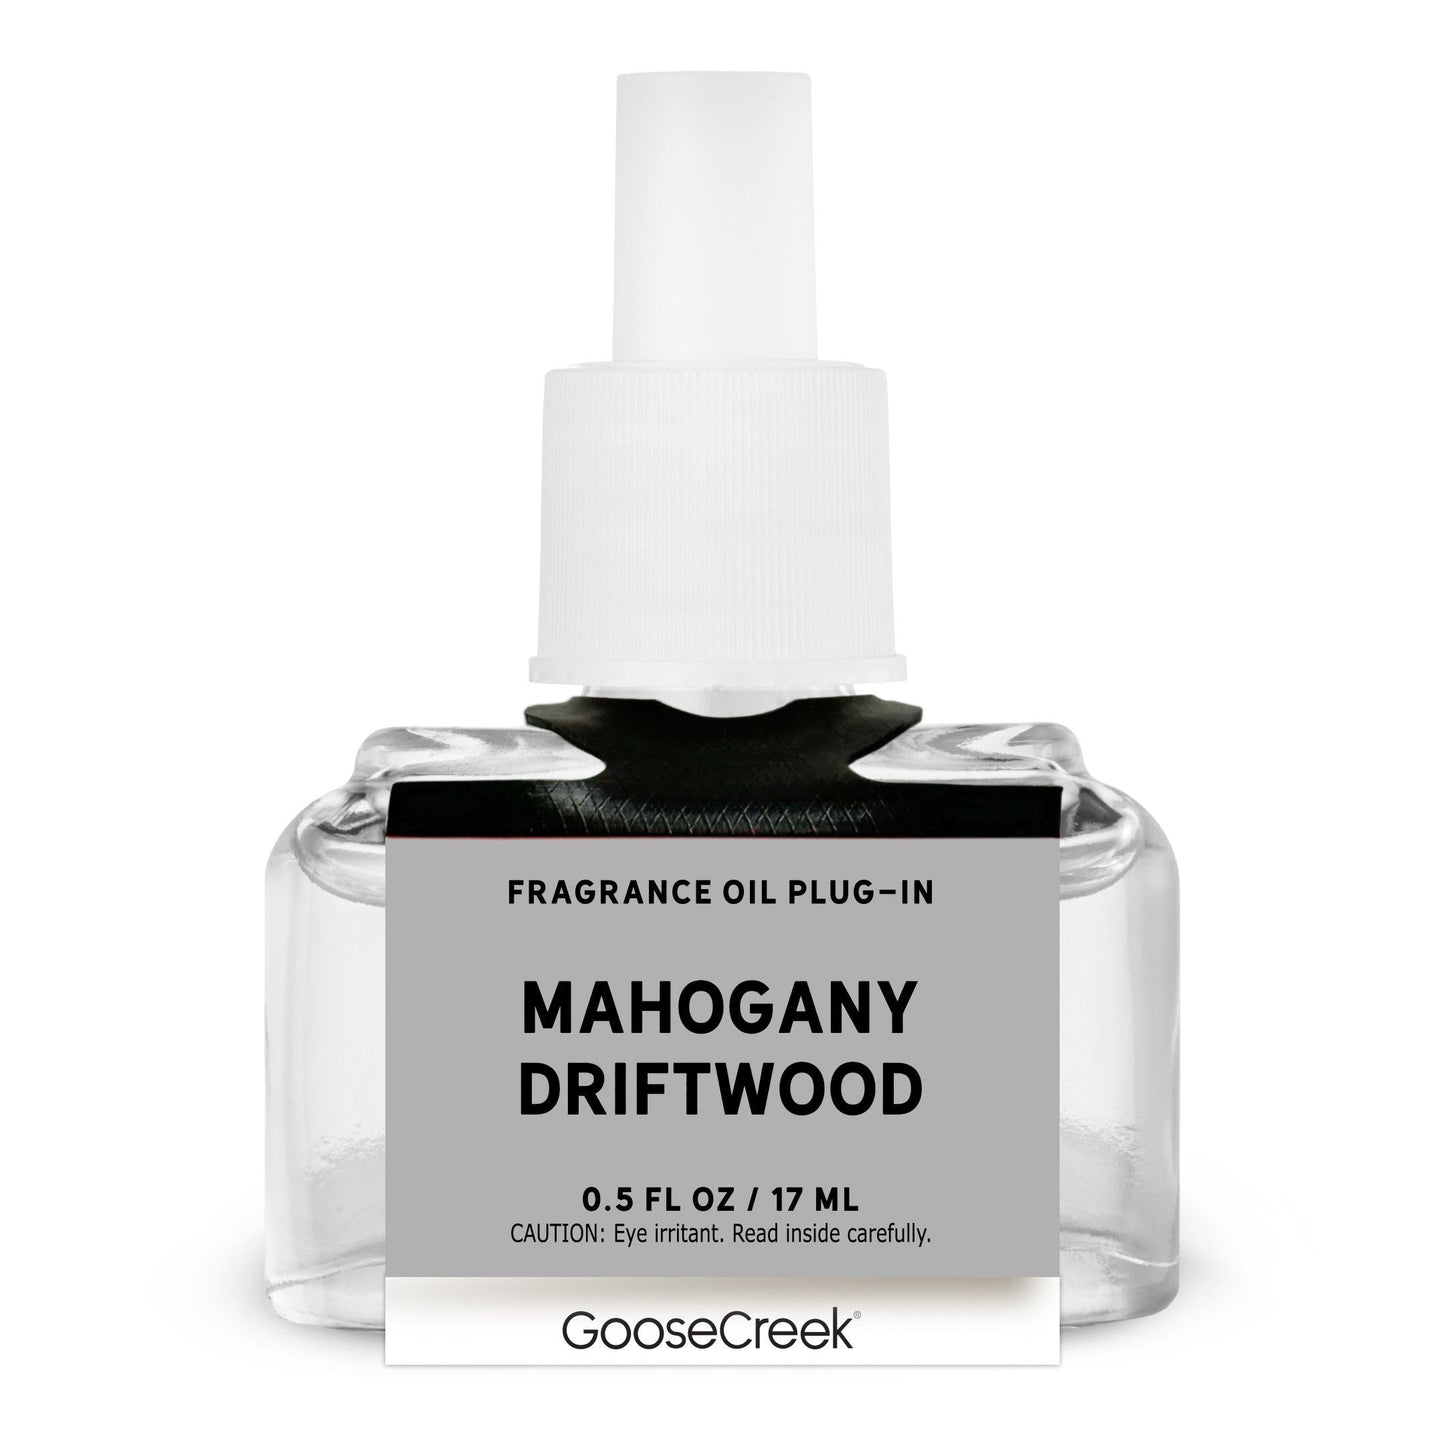 Mahogany + Teakwood Premium Grade Fragrance Oil